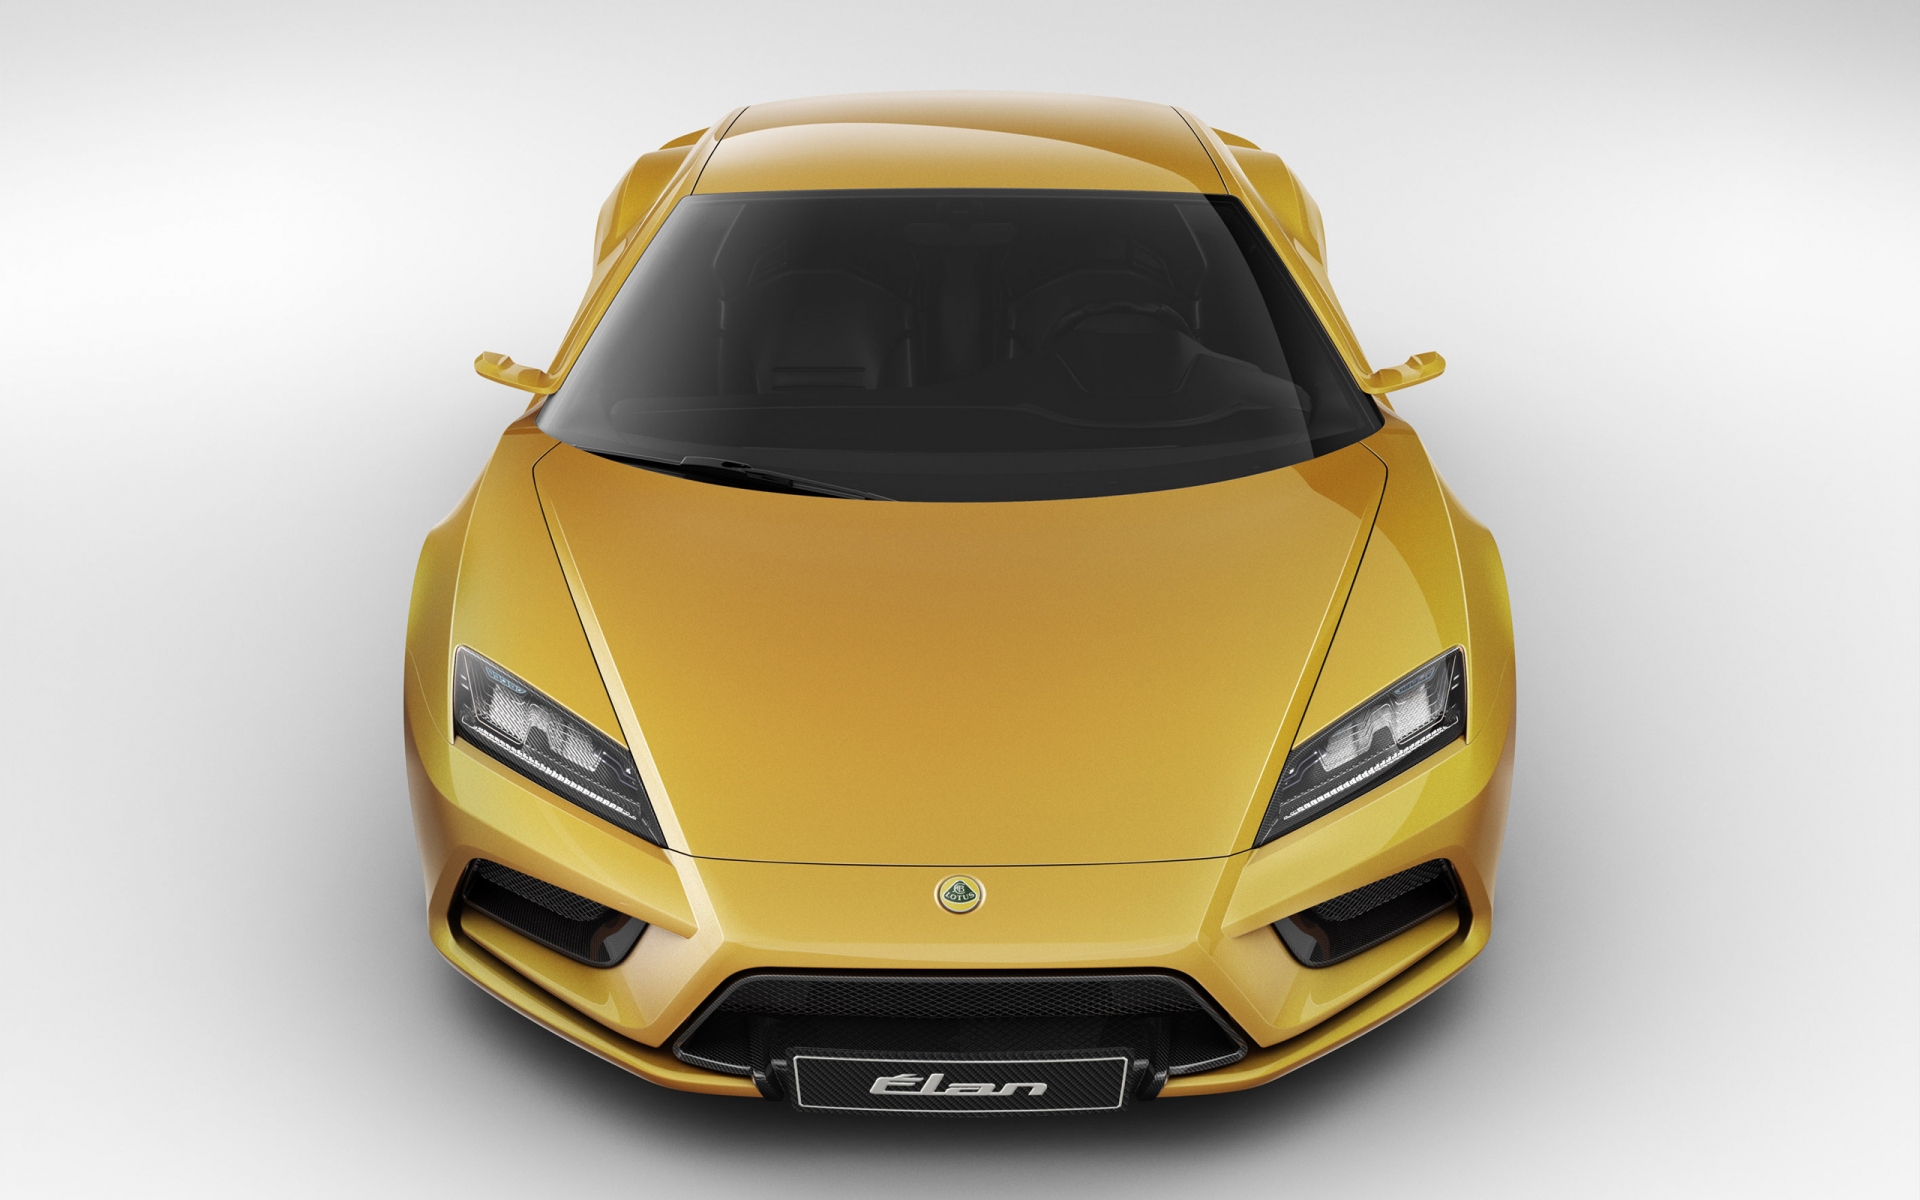 2013 Lotus Elan Studio Front for 1920 x 1200 widescreen resolution